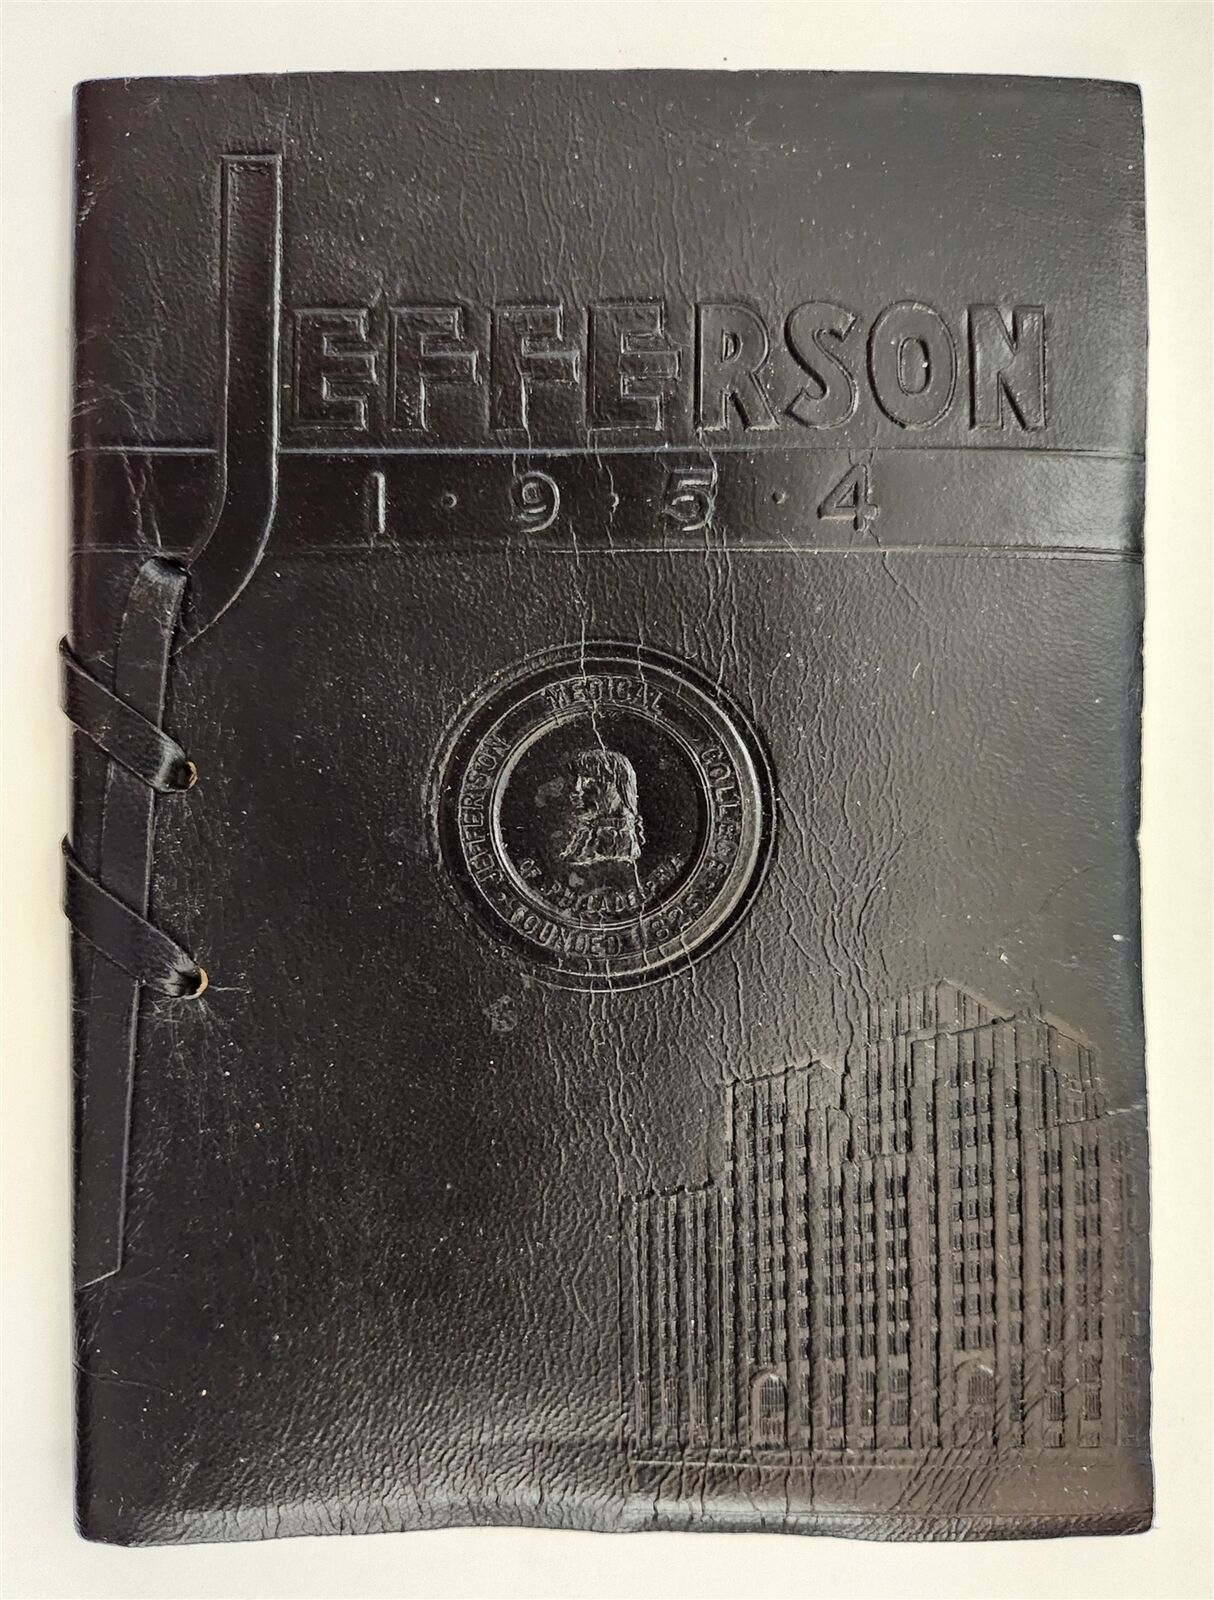 1954 vintage JEFFERSON MEDICAL COLLEGE leather COMMENCEMENT PROGRAM booklet